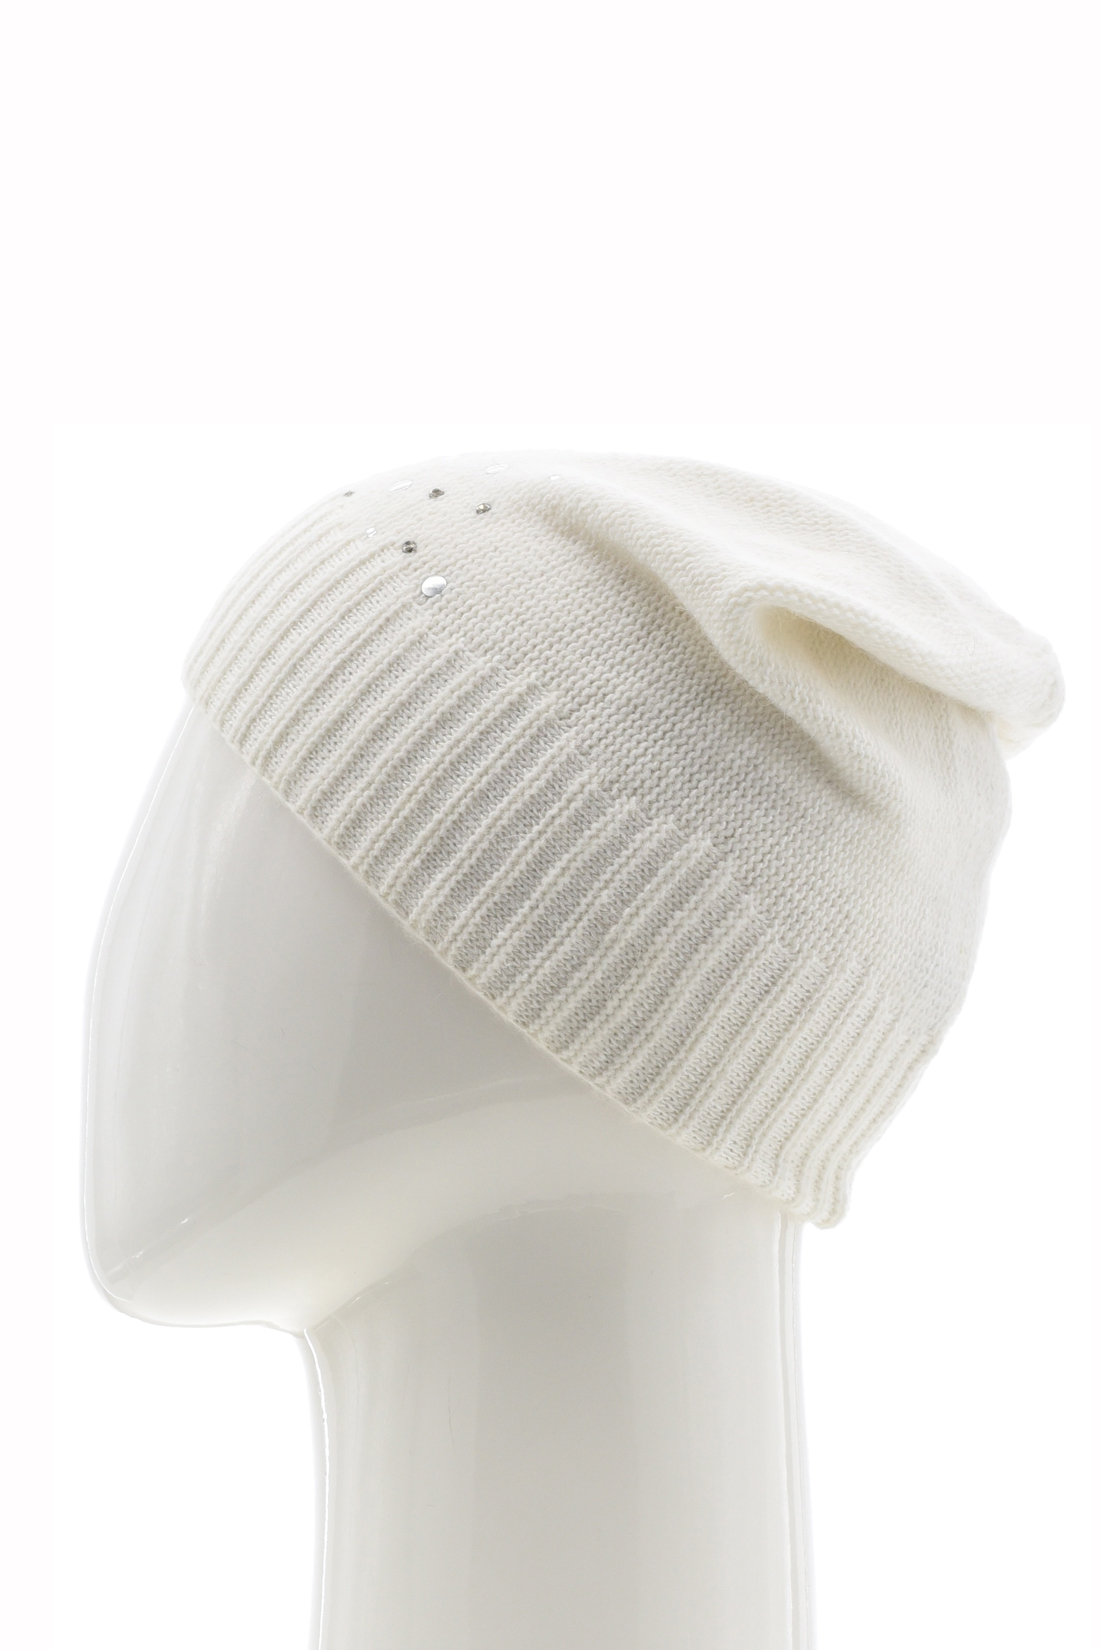 Полушерстяная шапка со стразами (арт. baon B348576), размер Б/р 56, цвет белый Полушерстяная шапка со стразами (арт. baon B348576) - фото 5